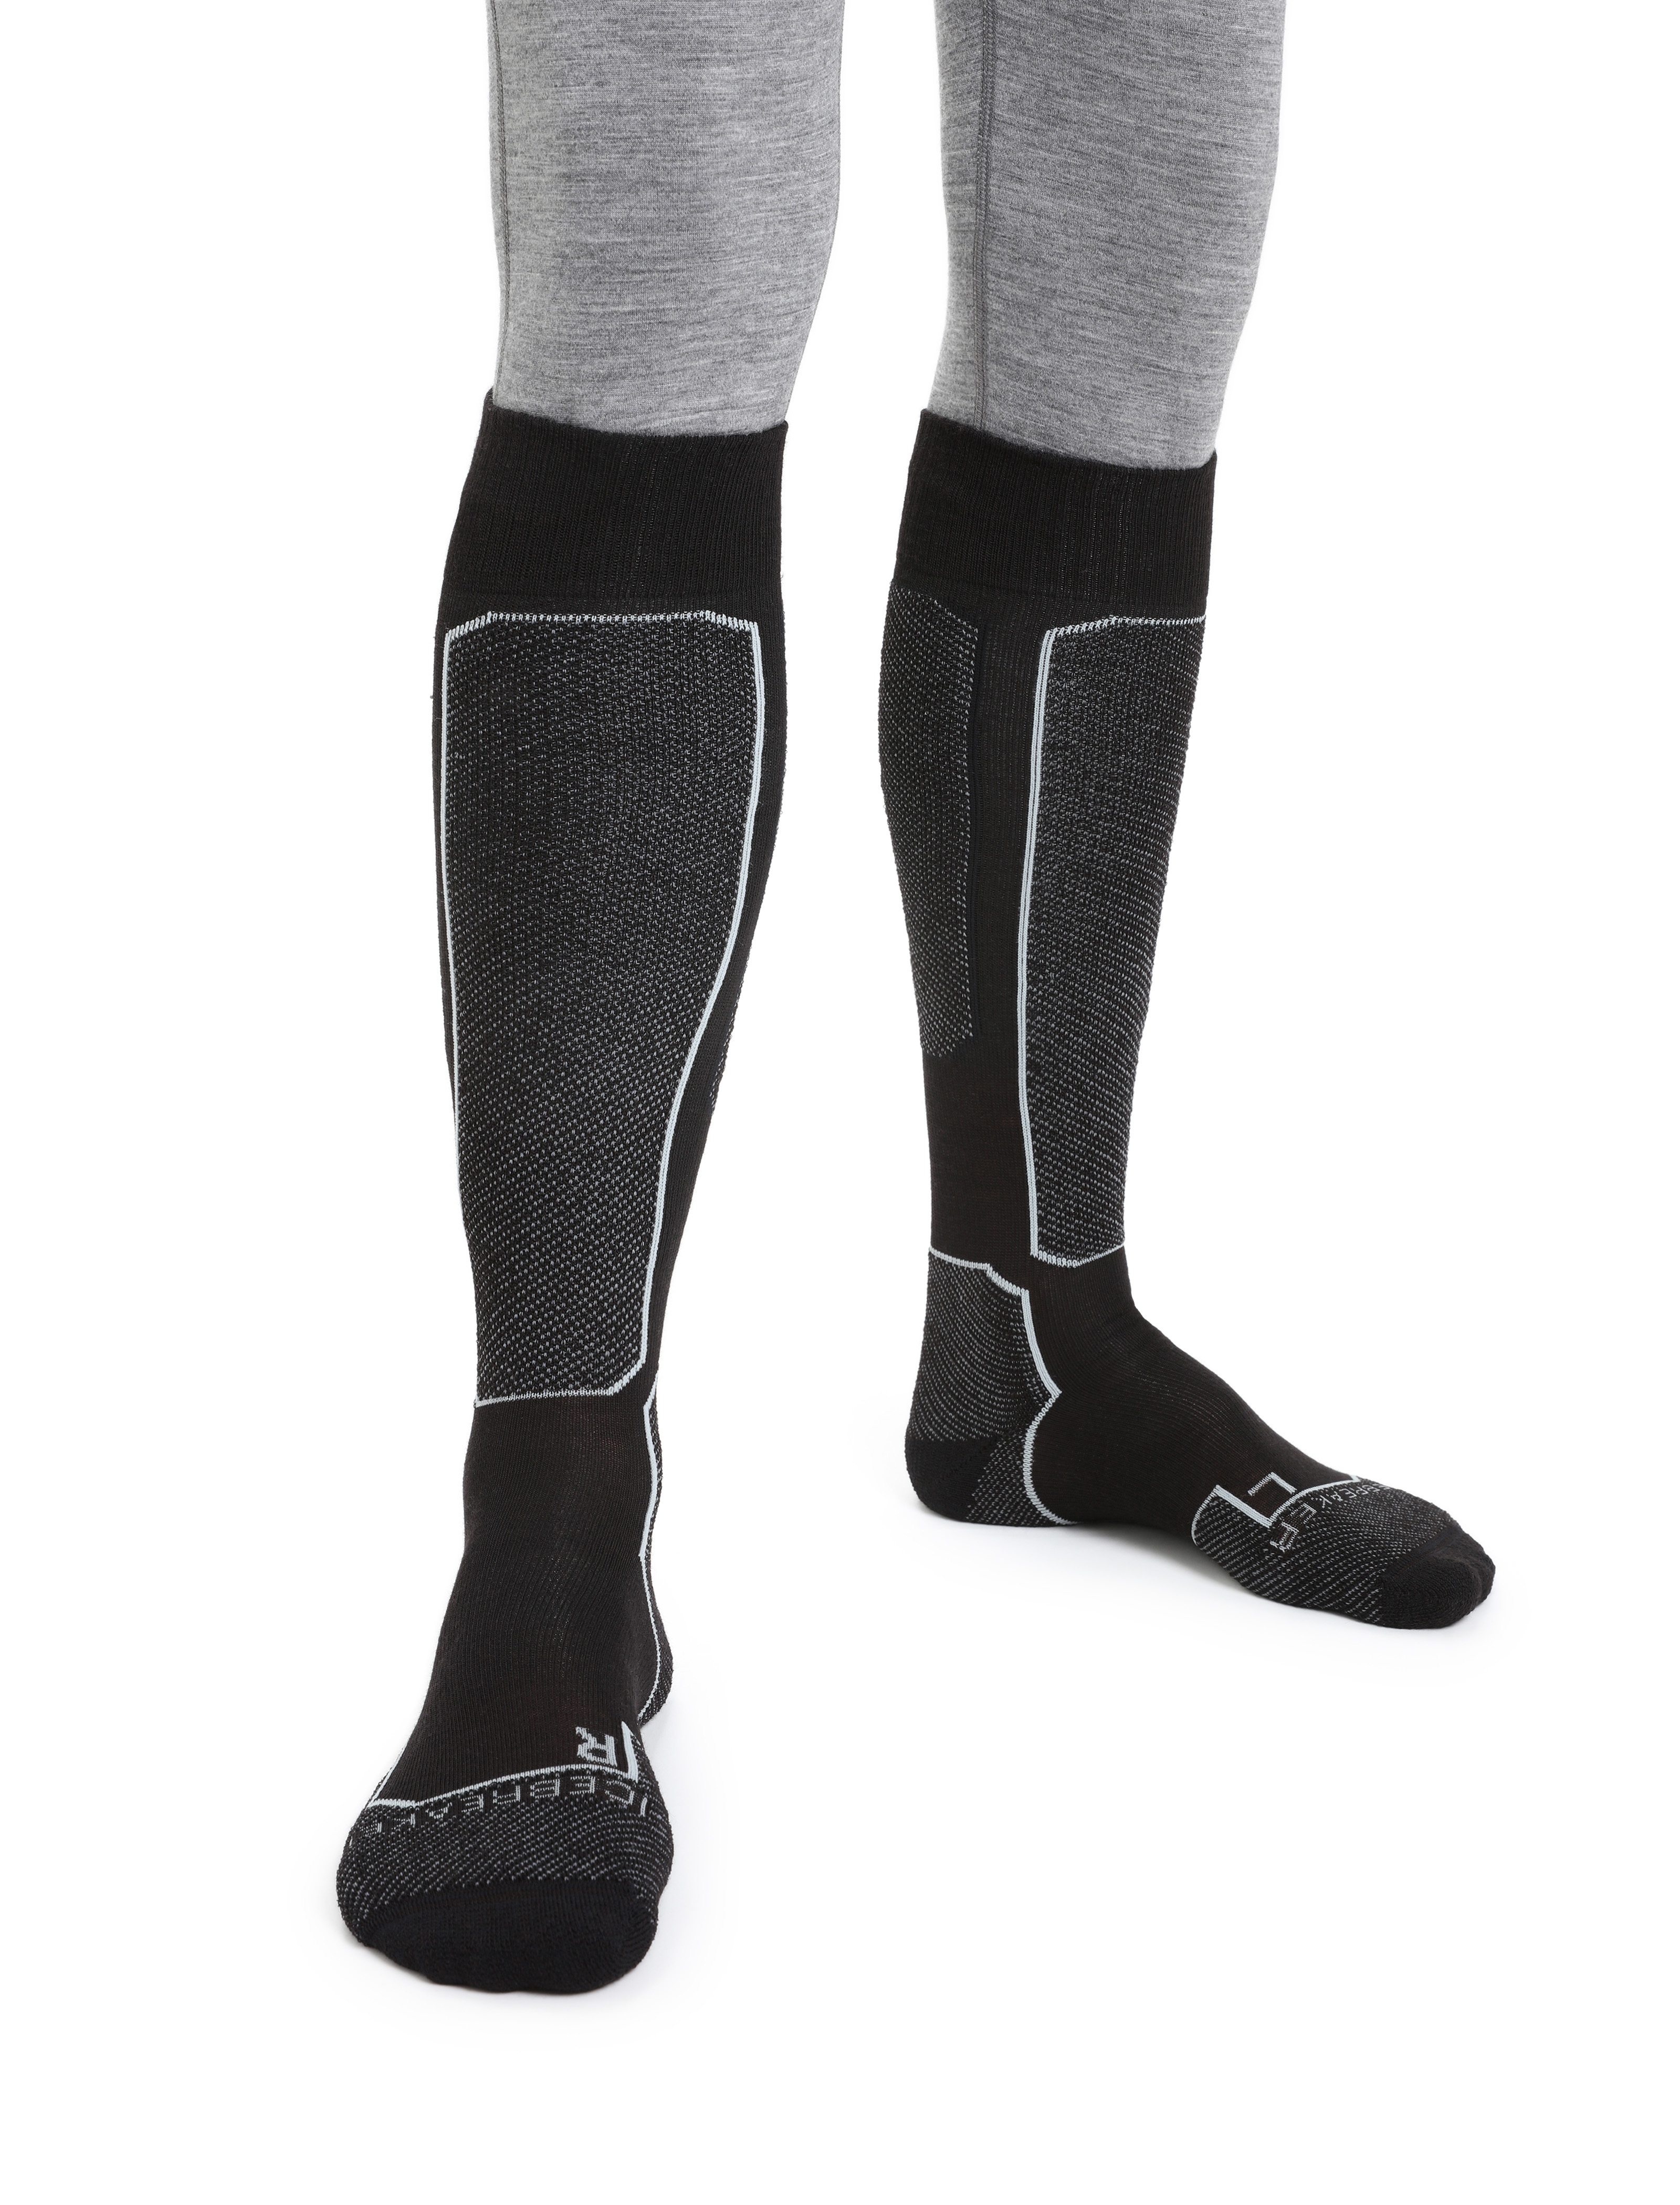 Icebreaker Ski+ Light Alps 3D Ski Socks (For Women) - Save 38%